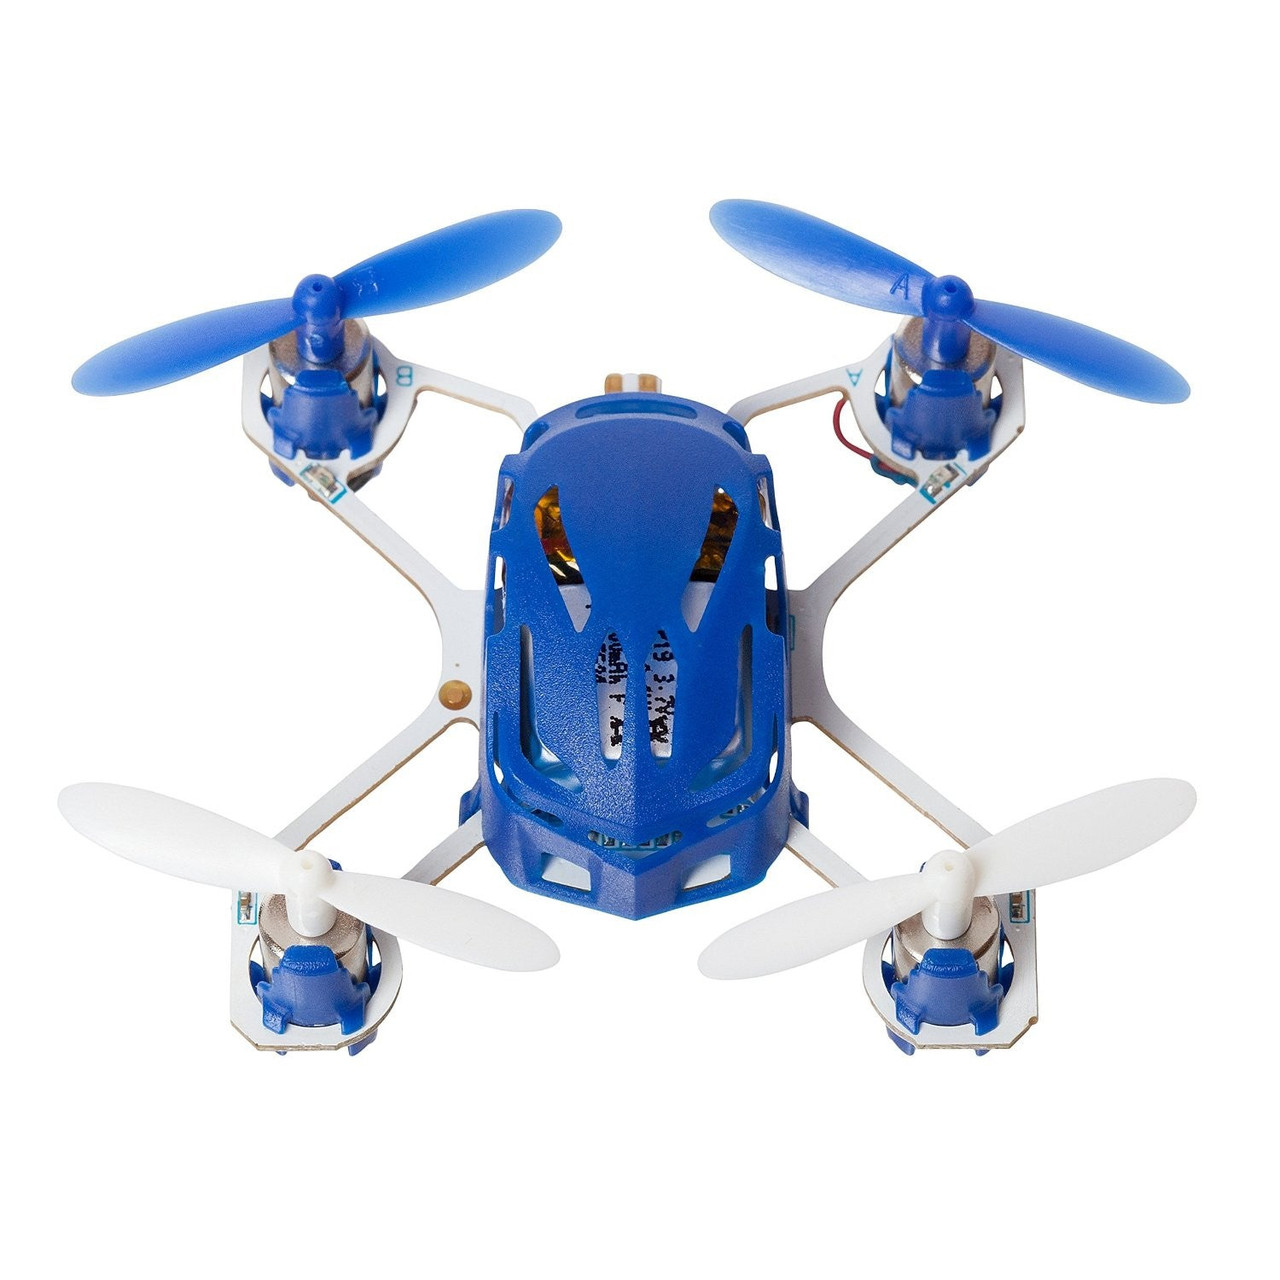 Hubsan Drone H111 X4 Nano 2.4 GHz 4CH RC - Wires Computing